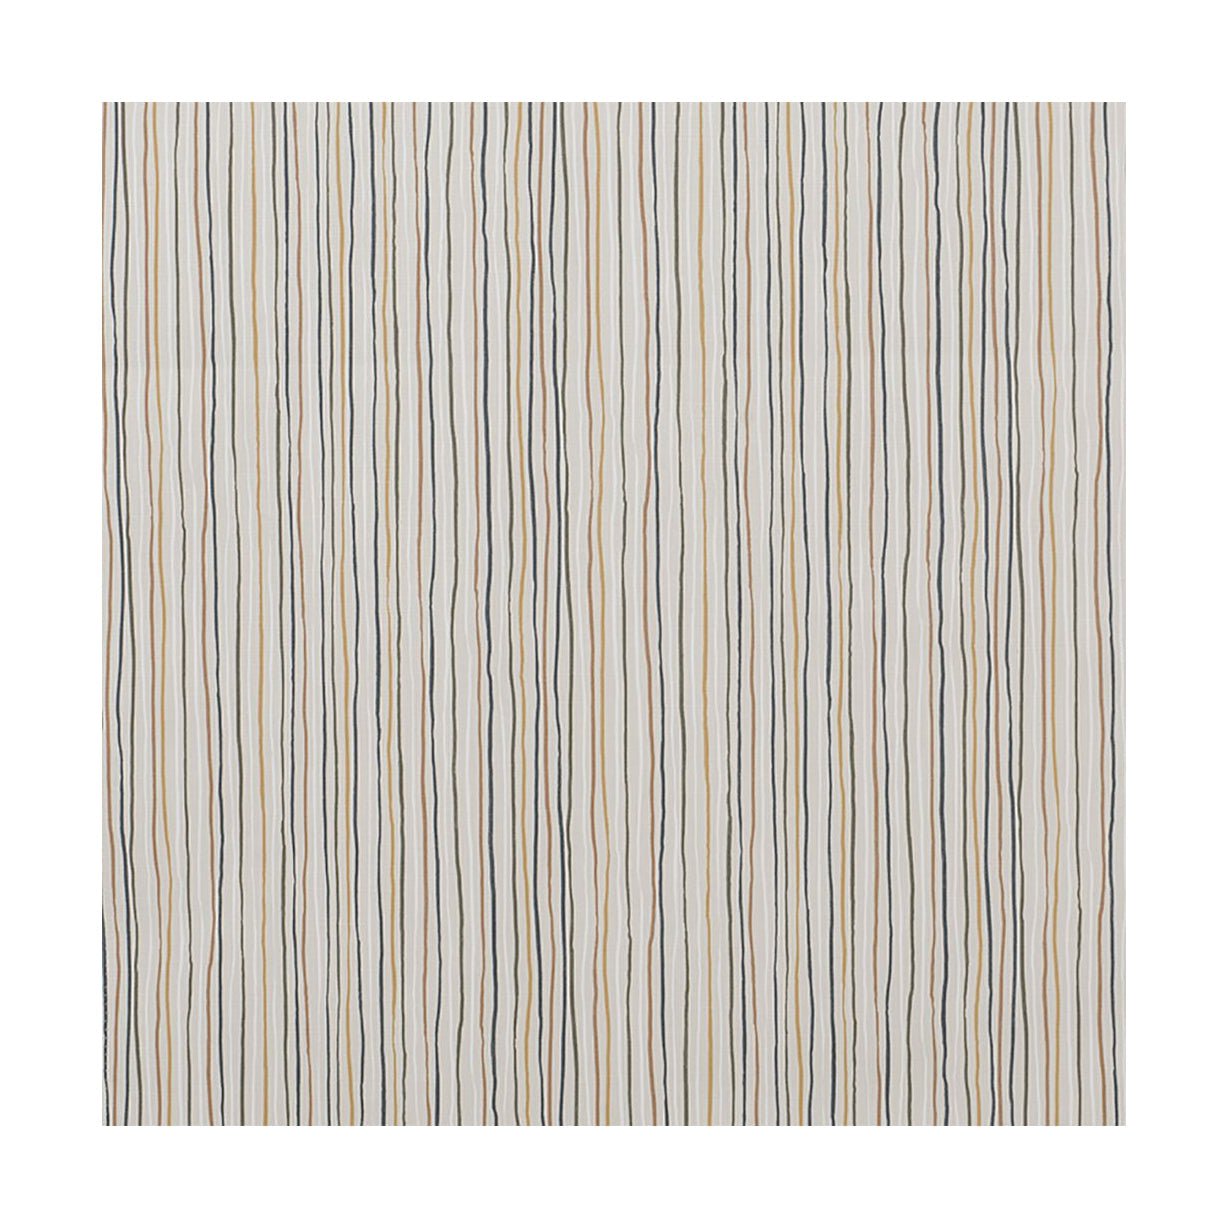 Spira Stripe CTC -tyg med akrylbredd 145 cm (pris per meter), mångfärgad